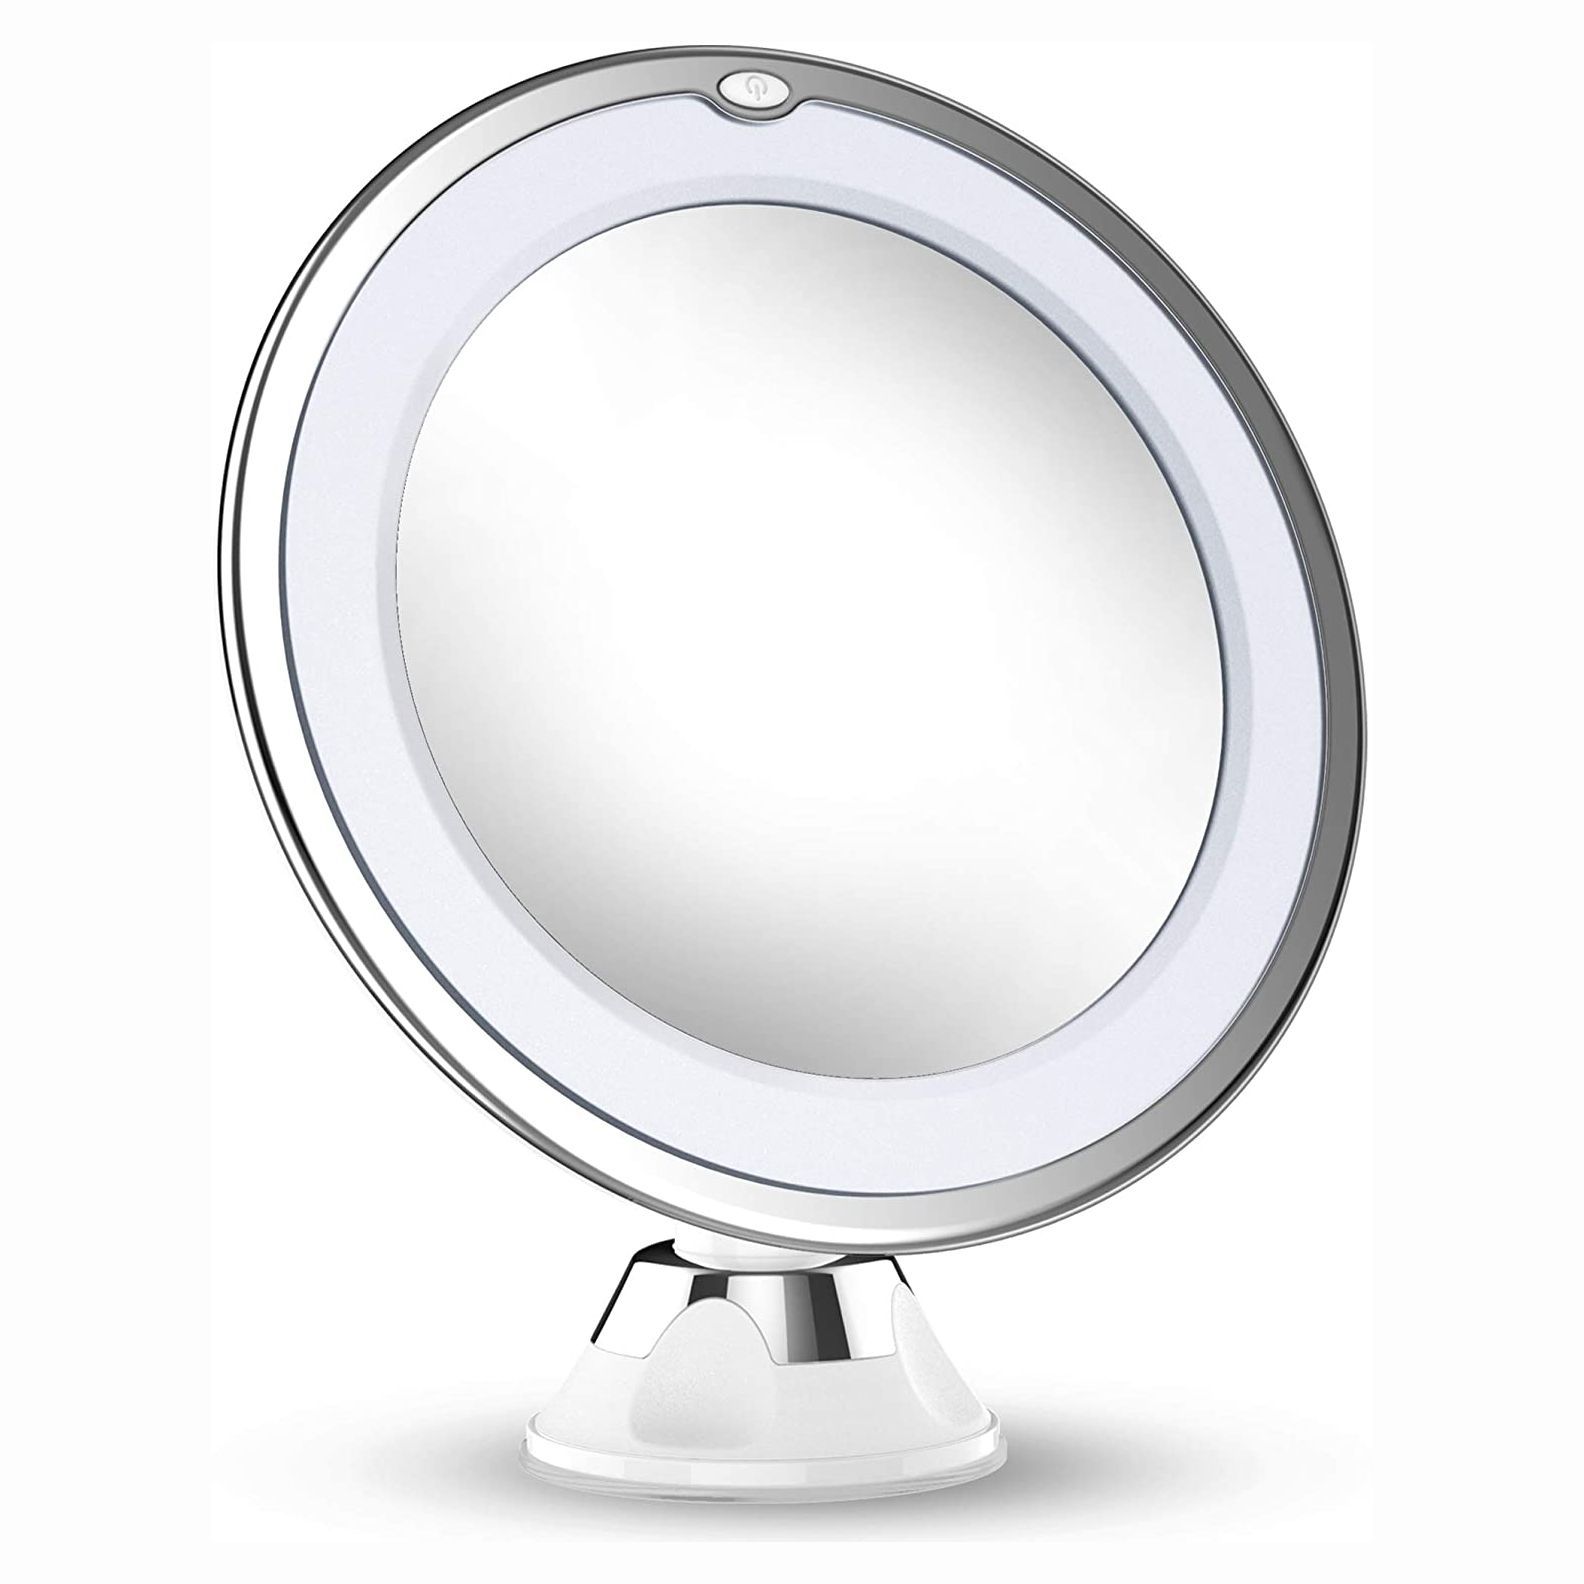 Vanity Makeup Mirrors With Lights, Best Tabletop Vanity Mirror With Lights